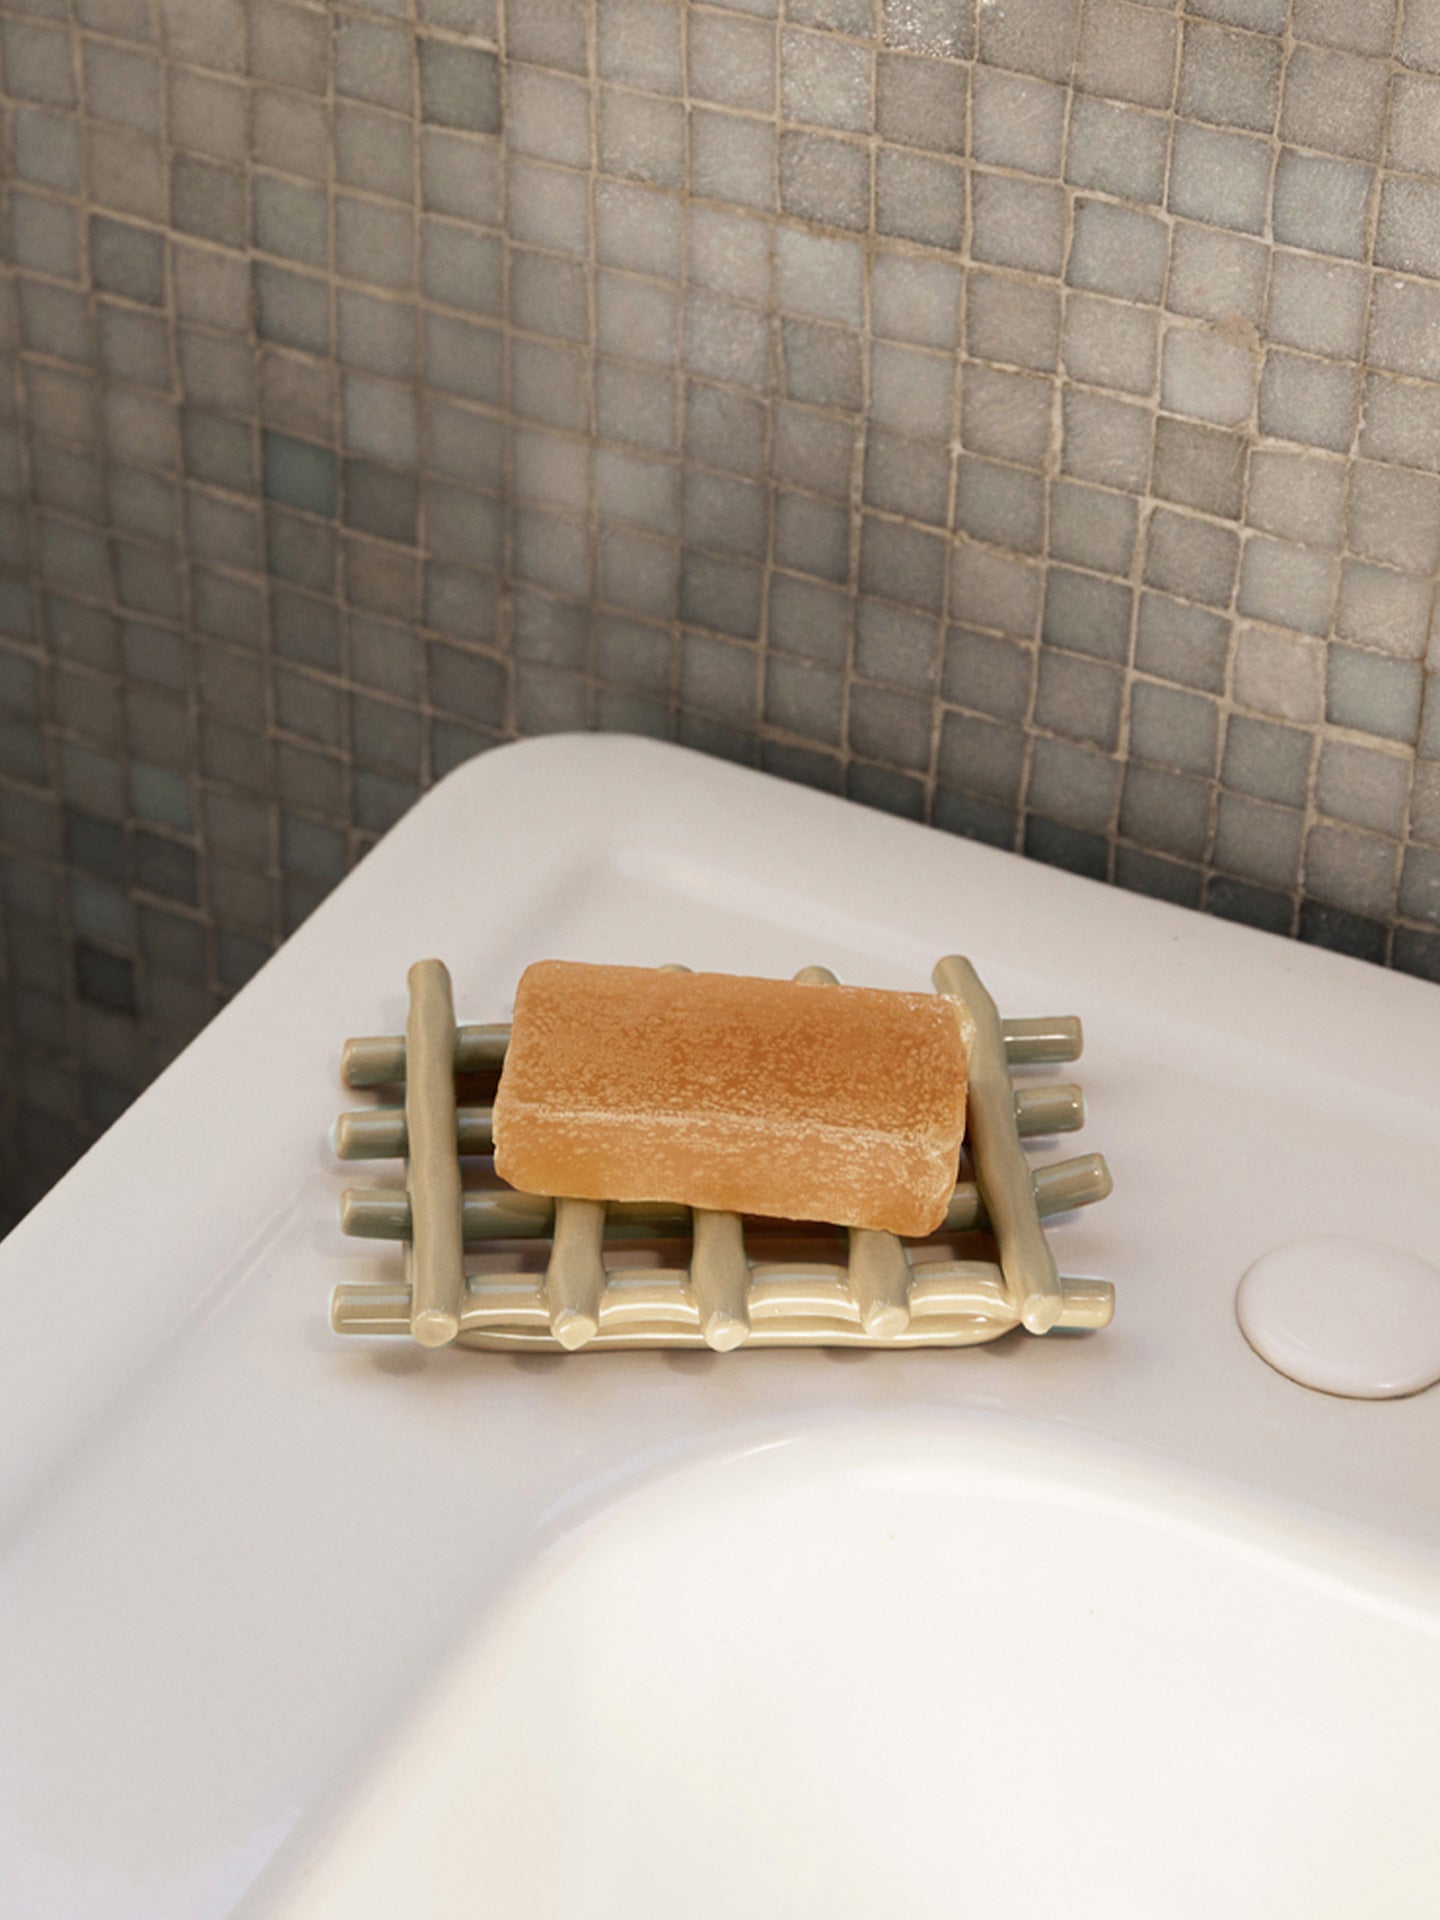 Ceramic Soap Tray - More Options